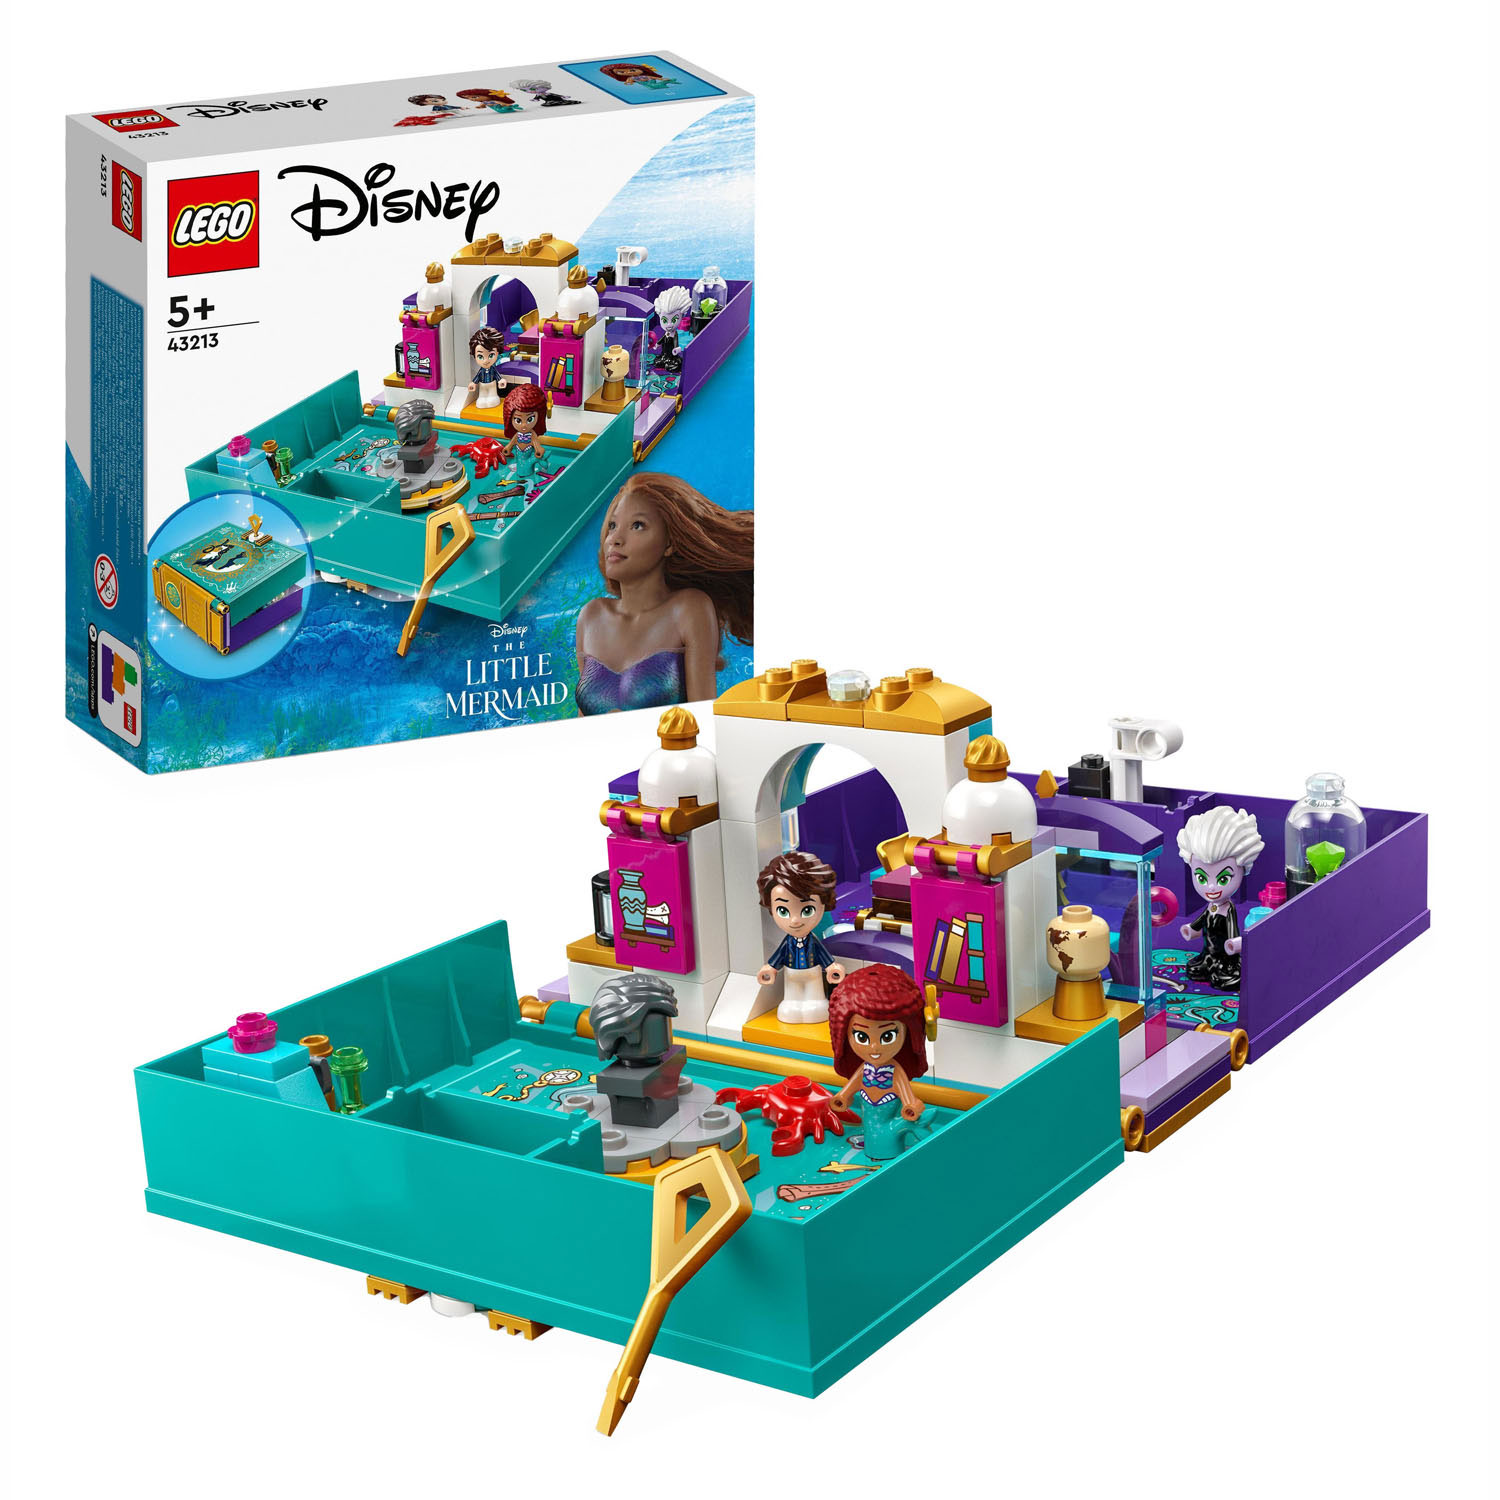 Acheter LEGO Princesse Disney 43213 Le livre